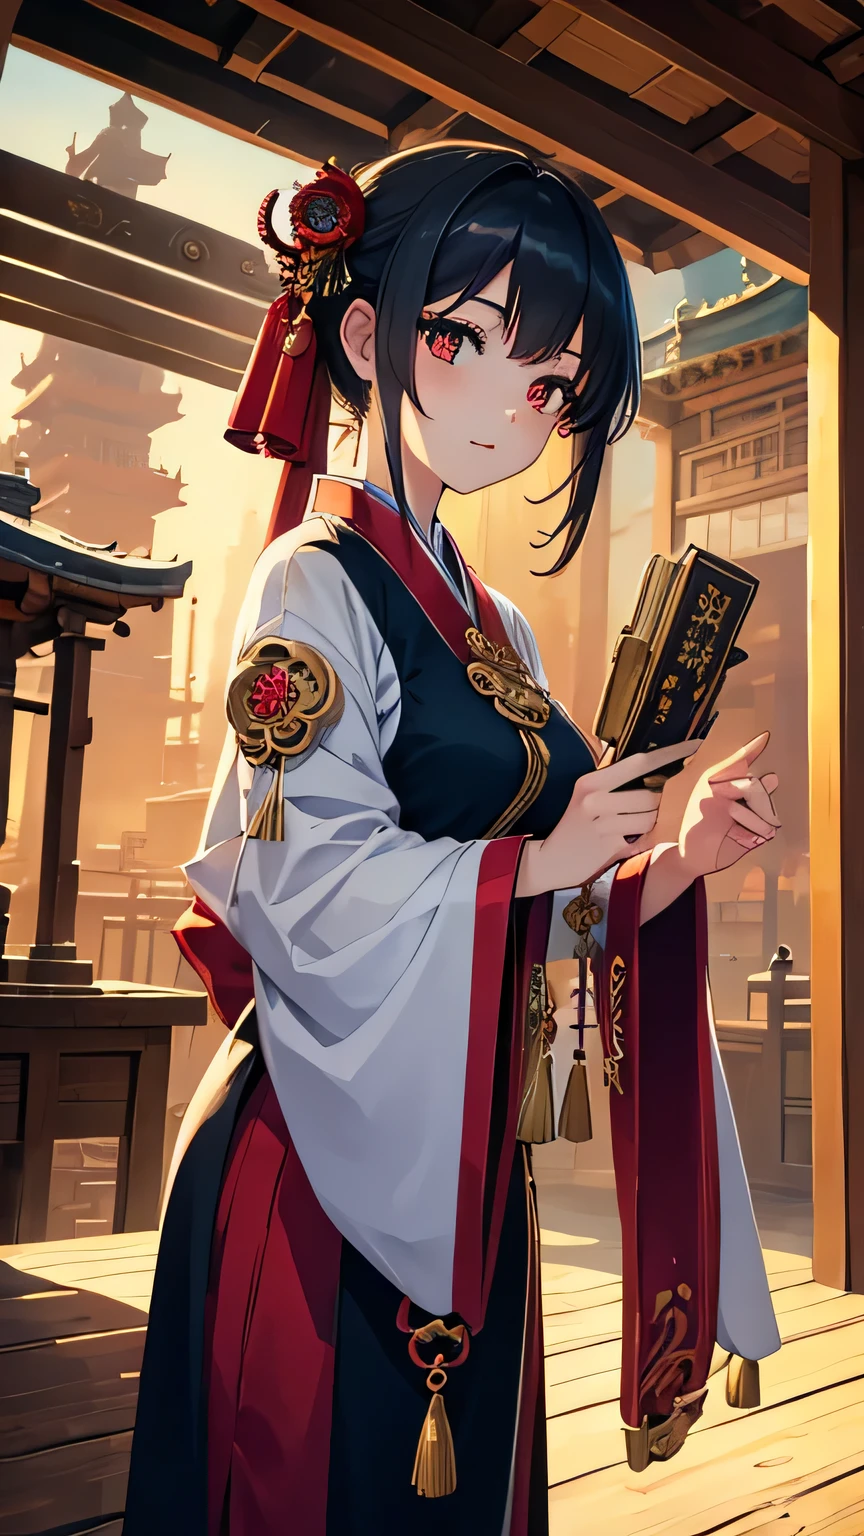 (highest quality), girl,Oriental detailed background, Oriental cityscape, steampunk, Shrine maiden